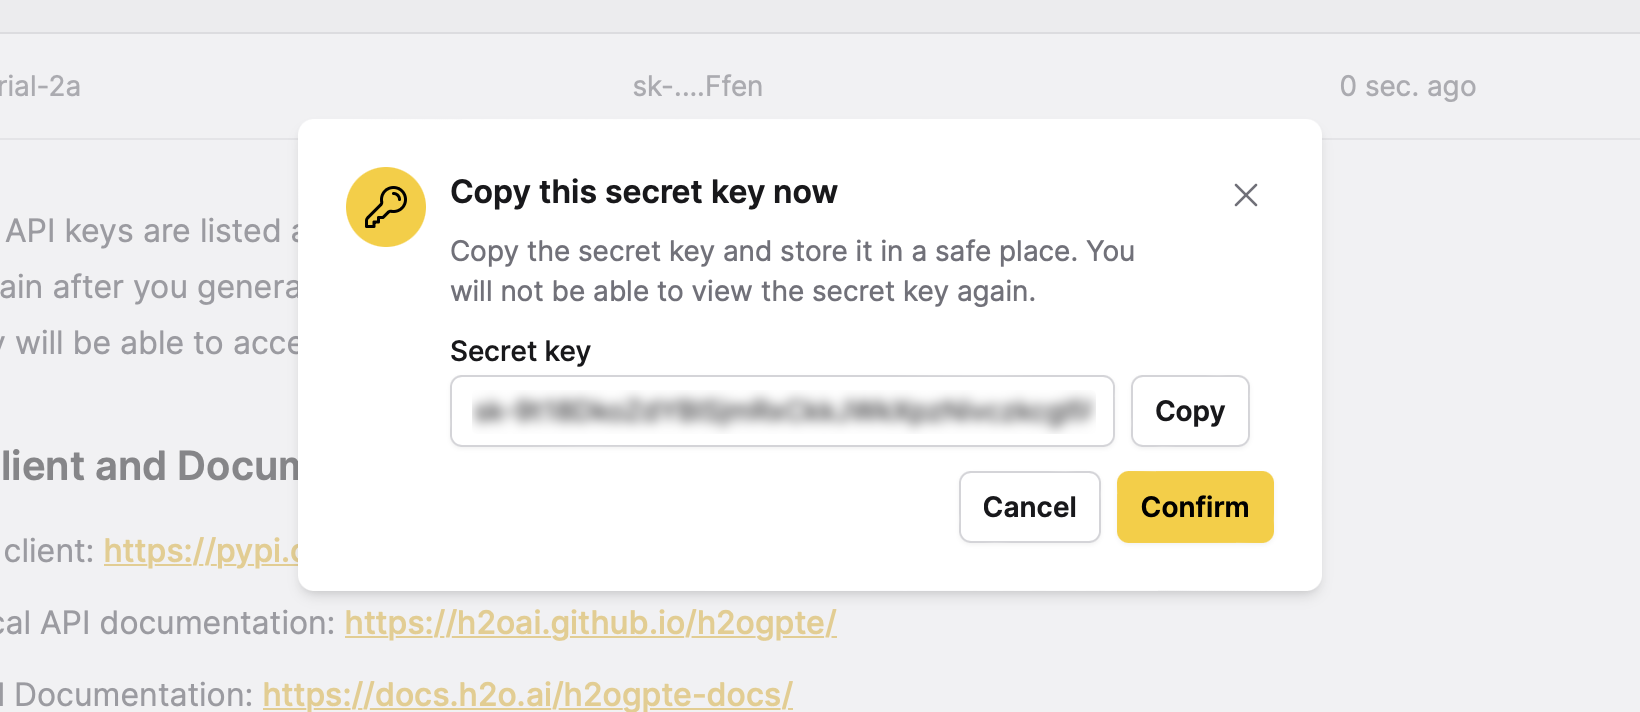 Copy secret key